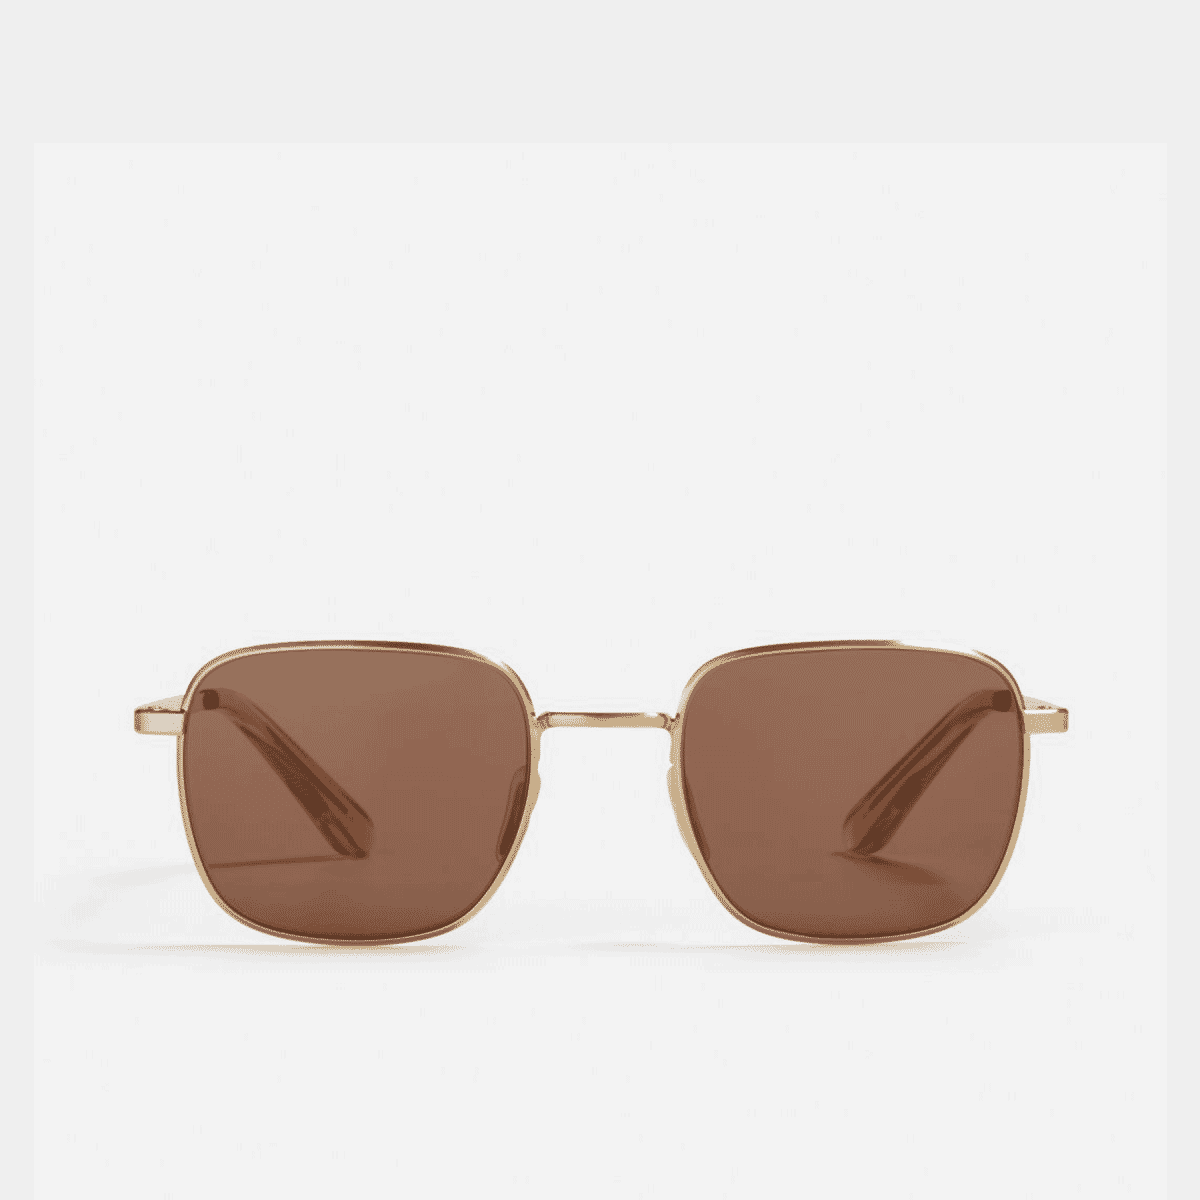 Best rectangular and square sunglasses for men | OPUMO Magazine